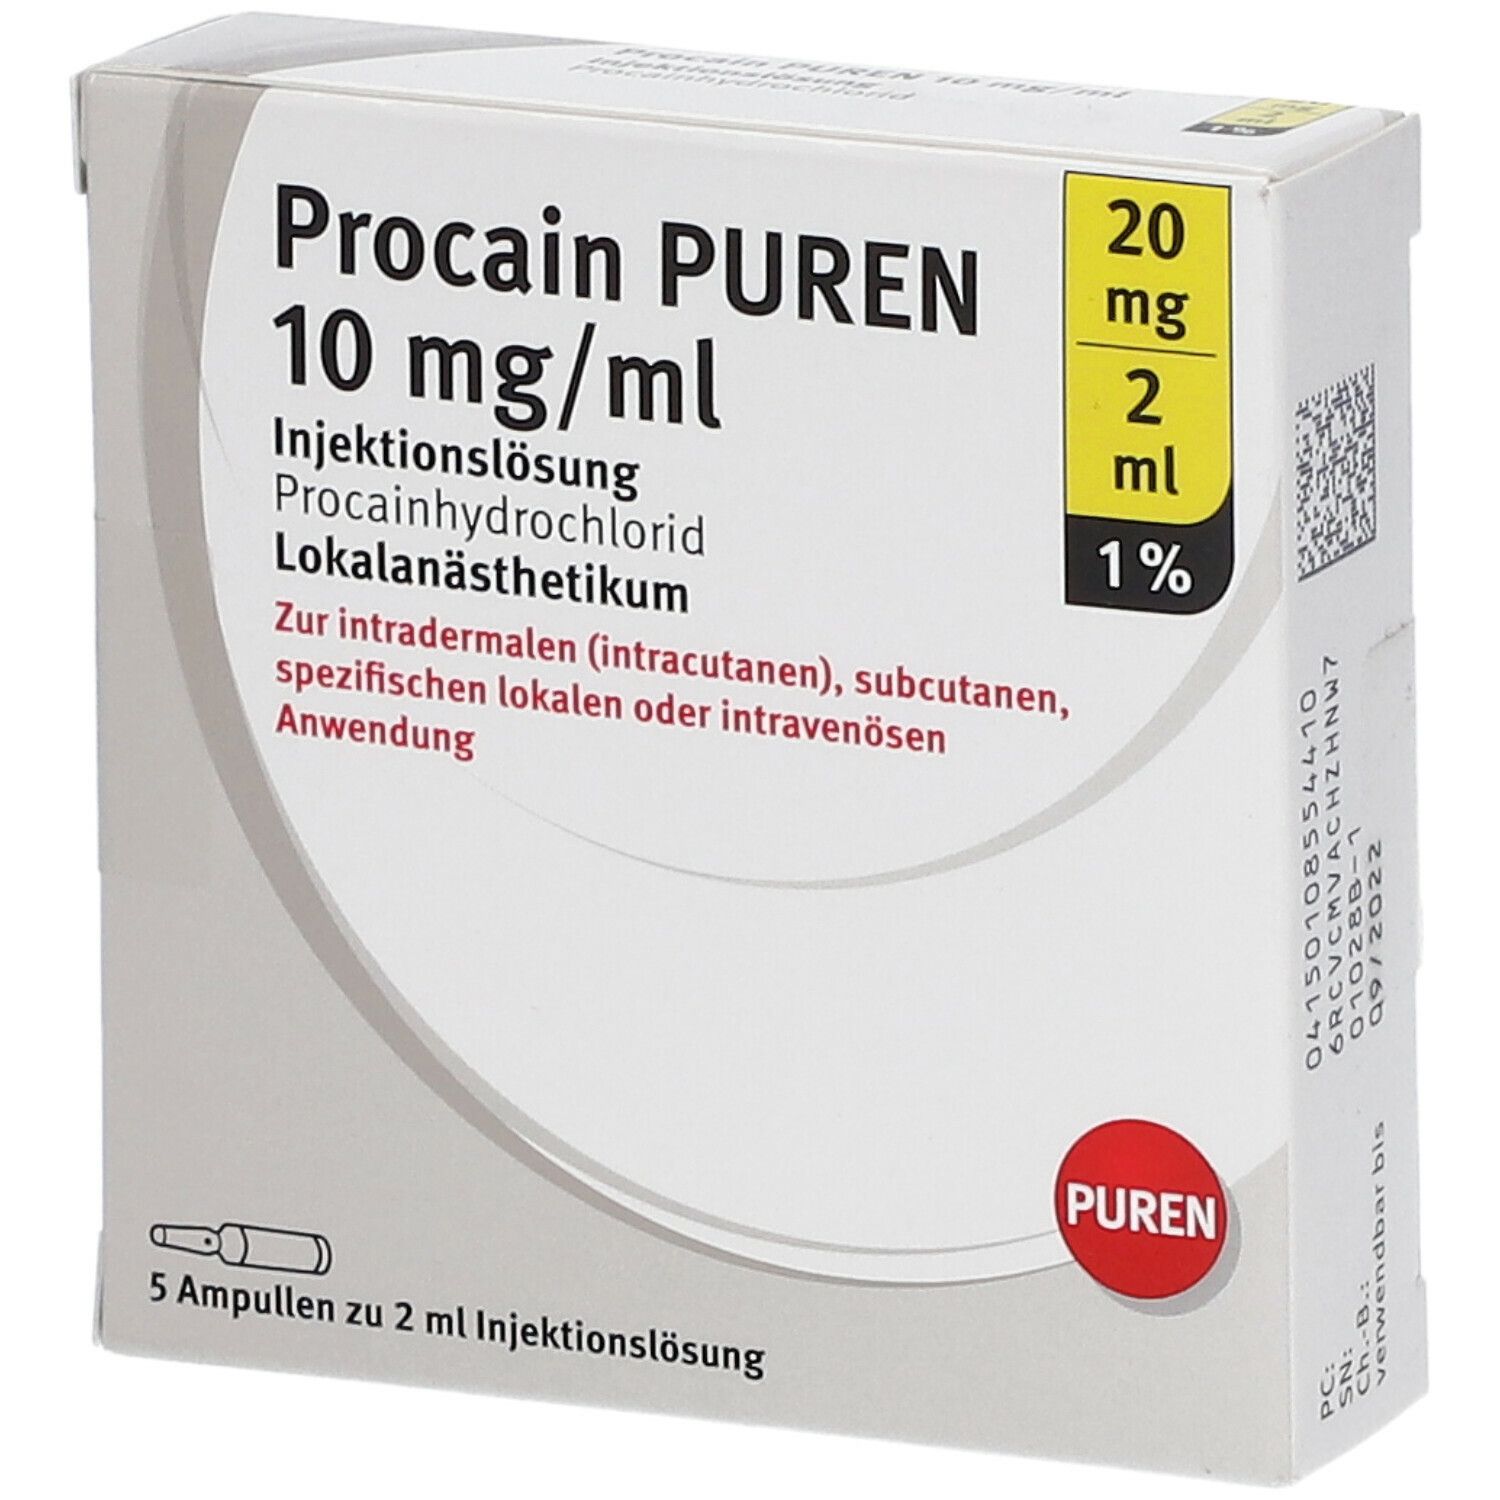 Procain PUREN 10mg/ml